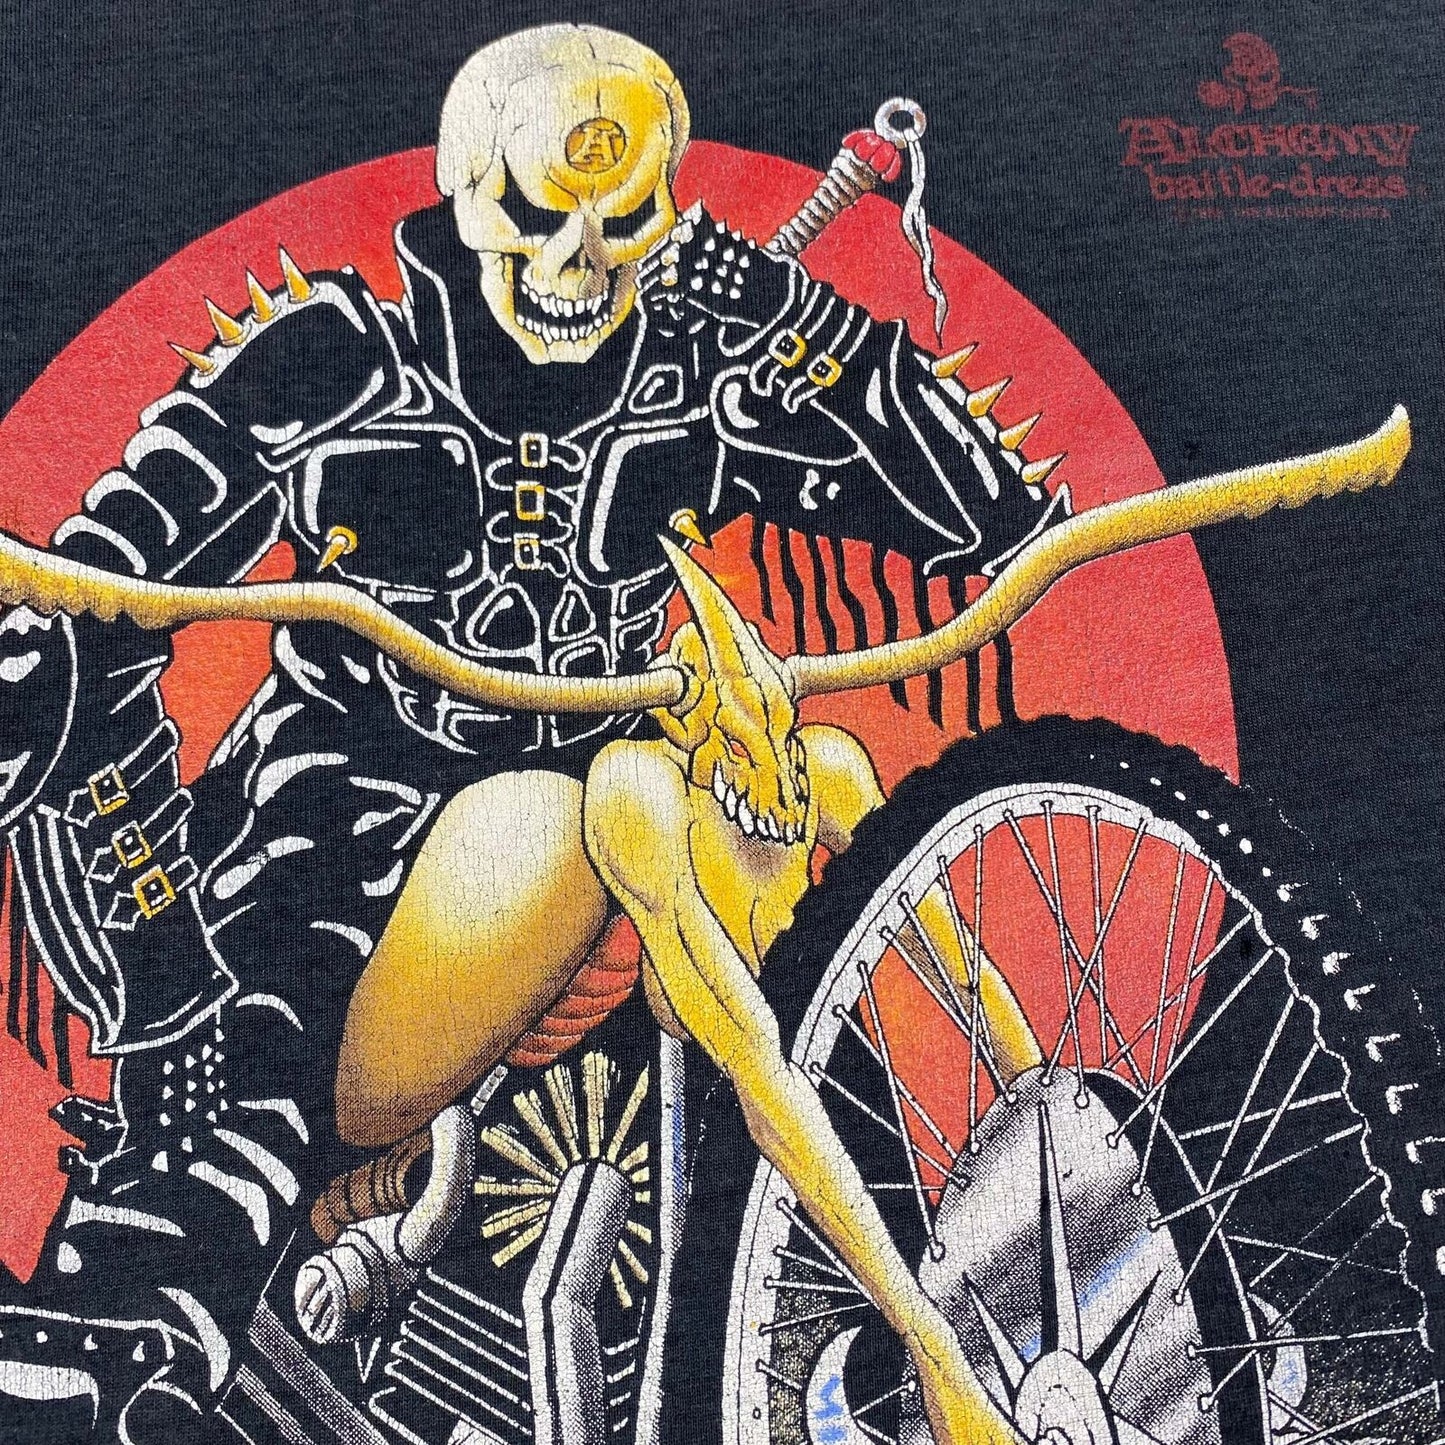 Alchemy Battle-Dress Skeleton Motorcycle T-Shirt